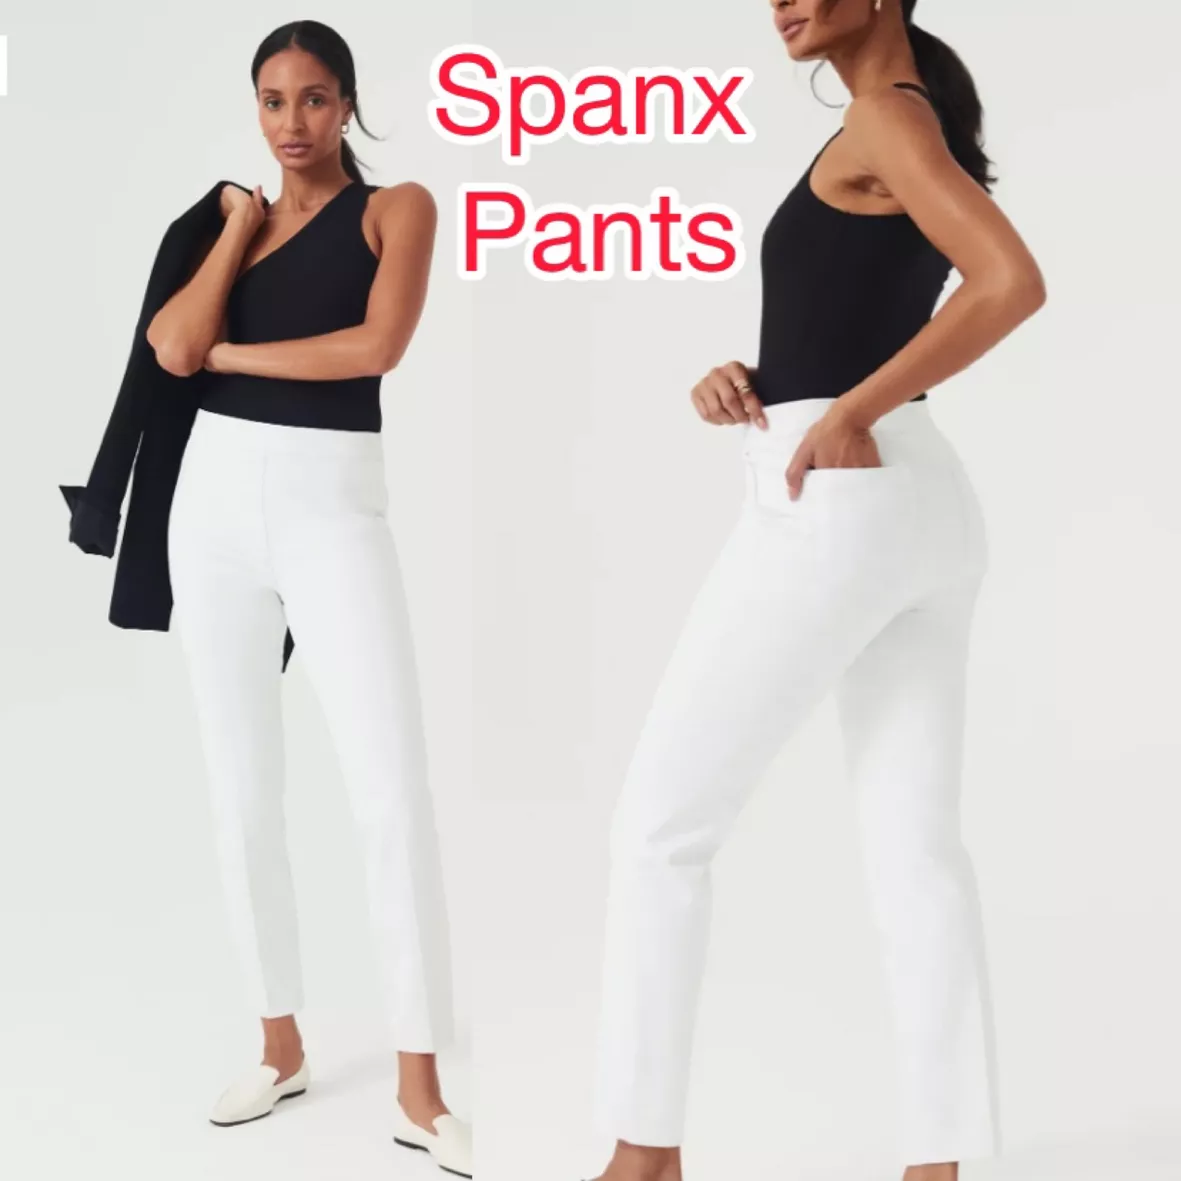 spanx pants